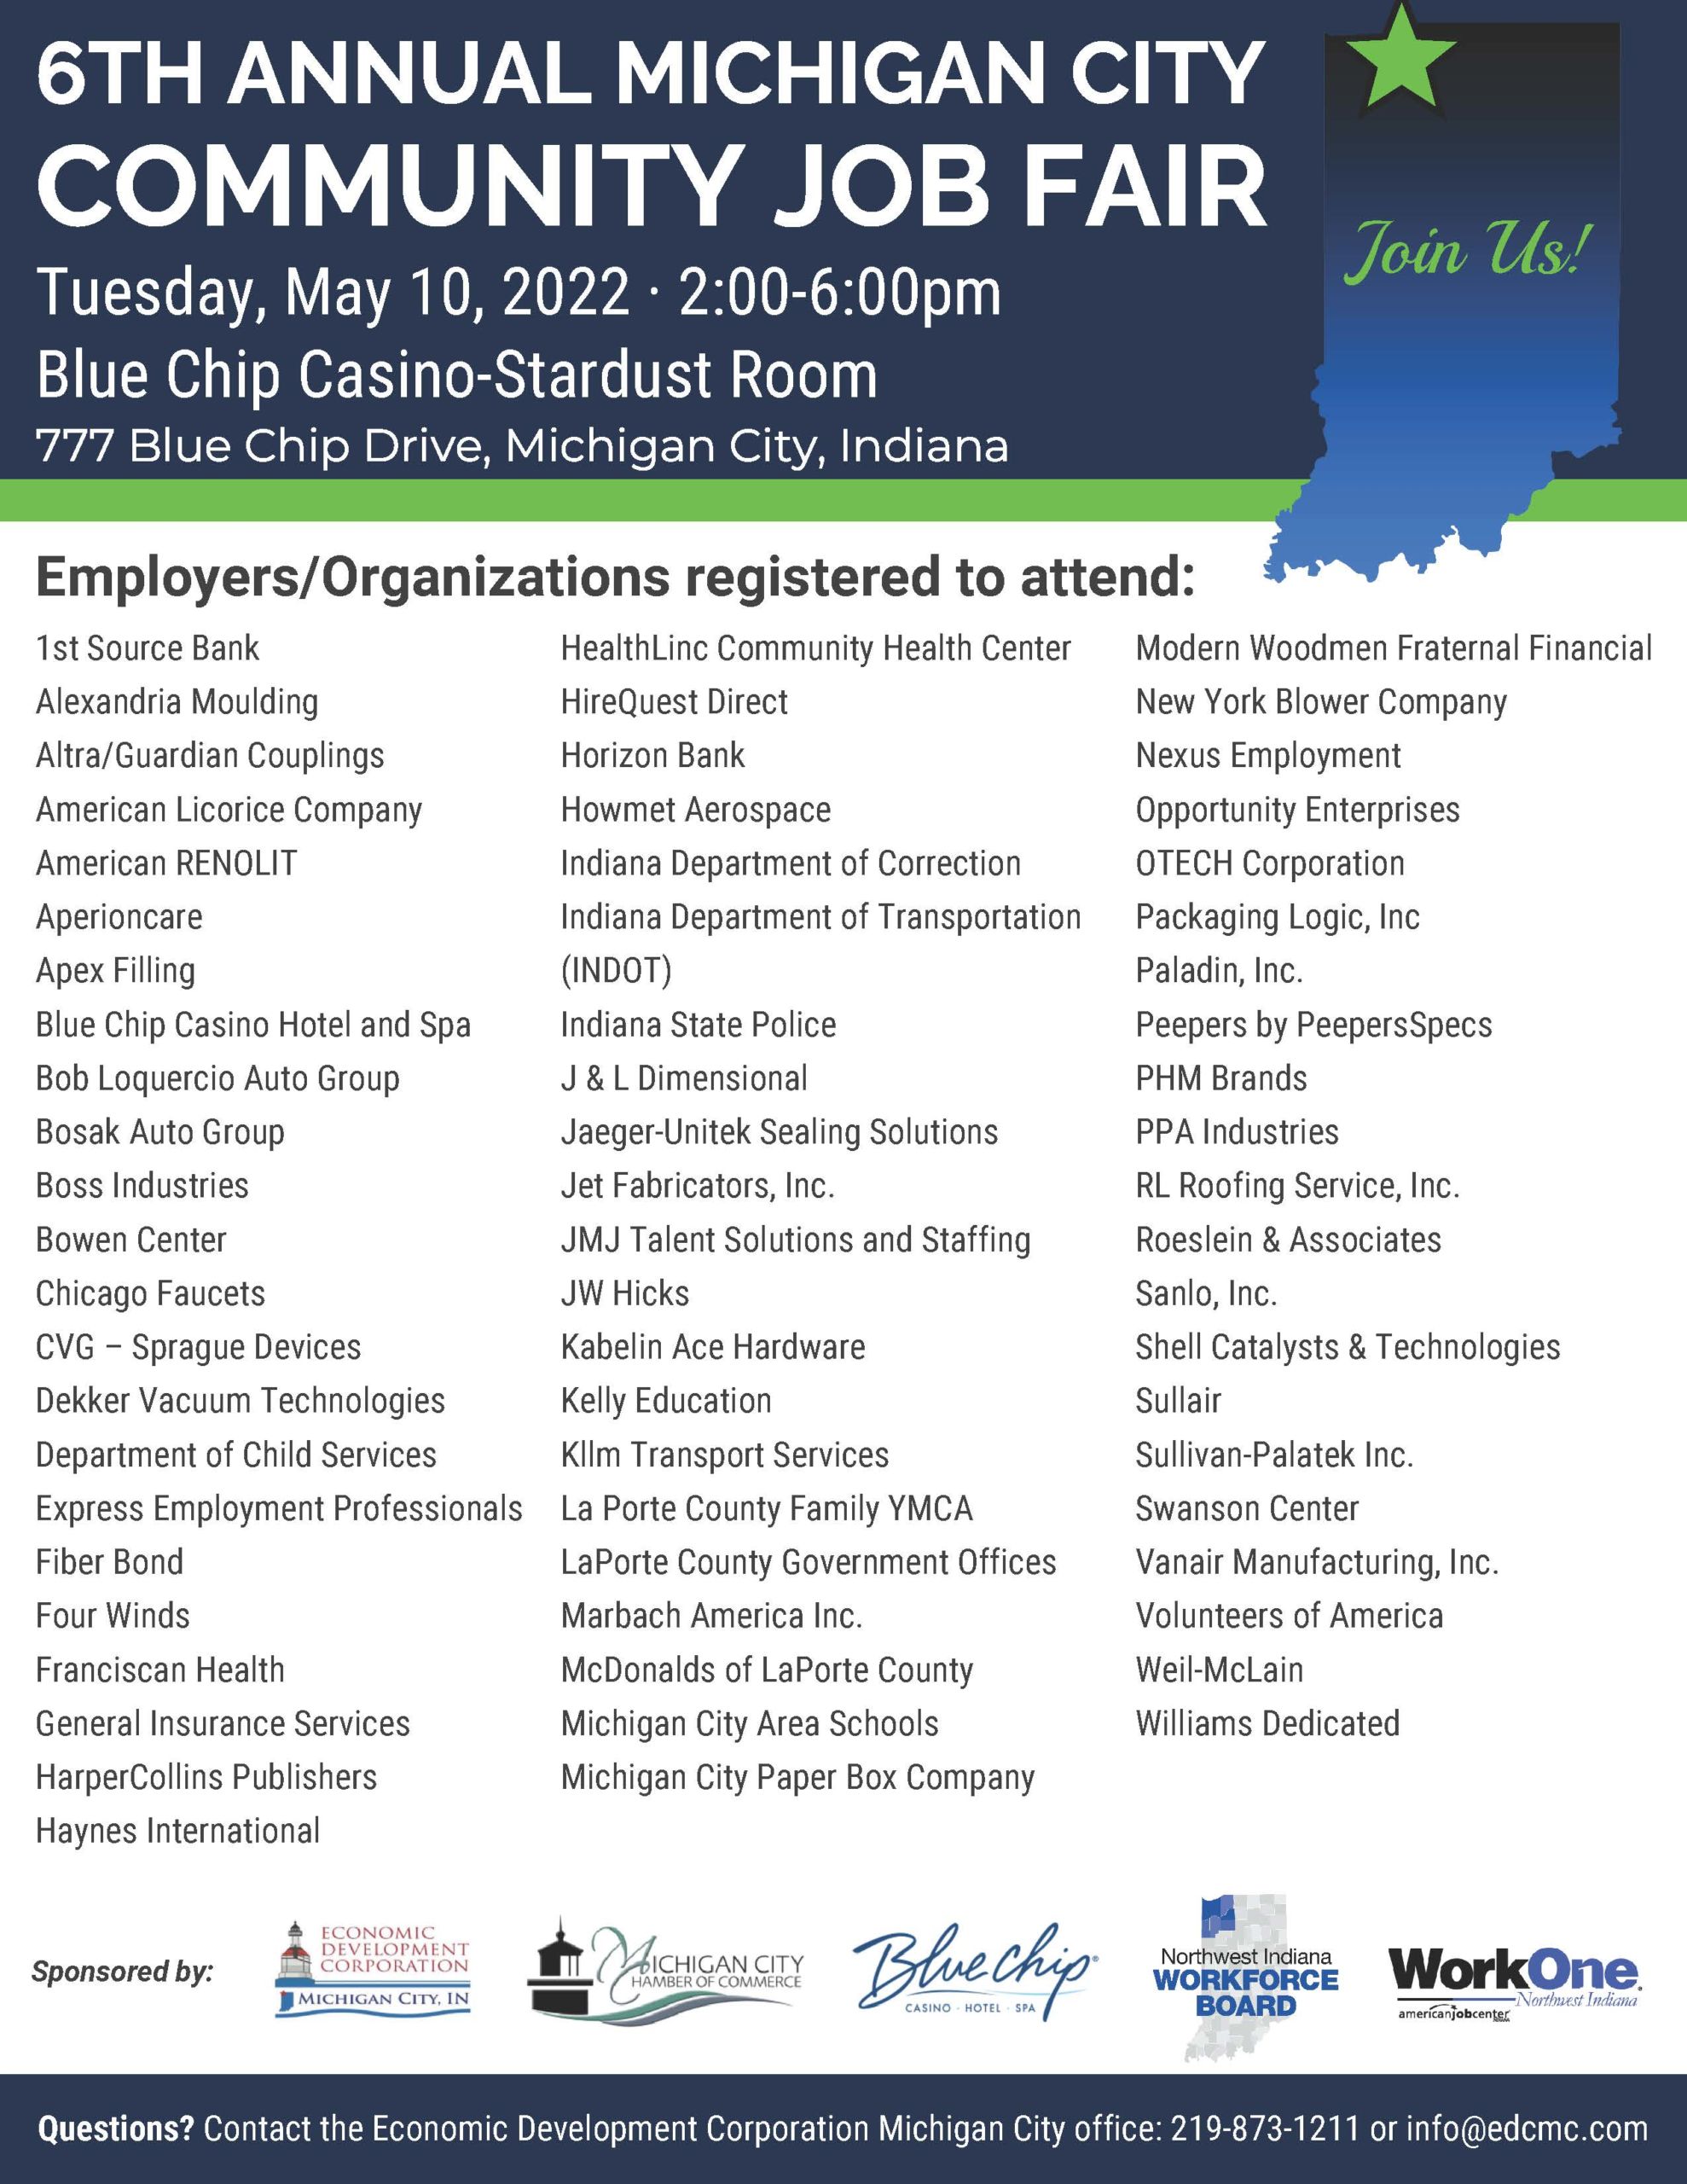 6th Annual Michigan City Job Fair May 10, 2022 LPC La Porte